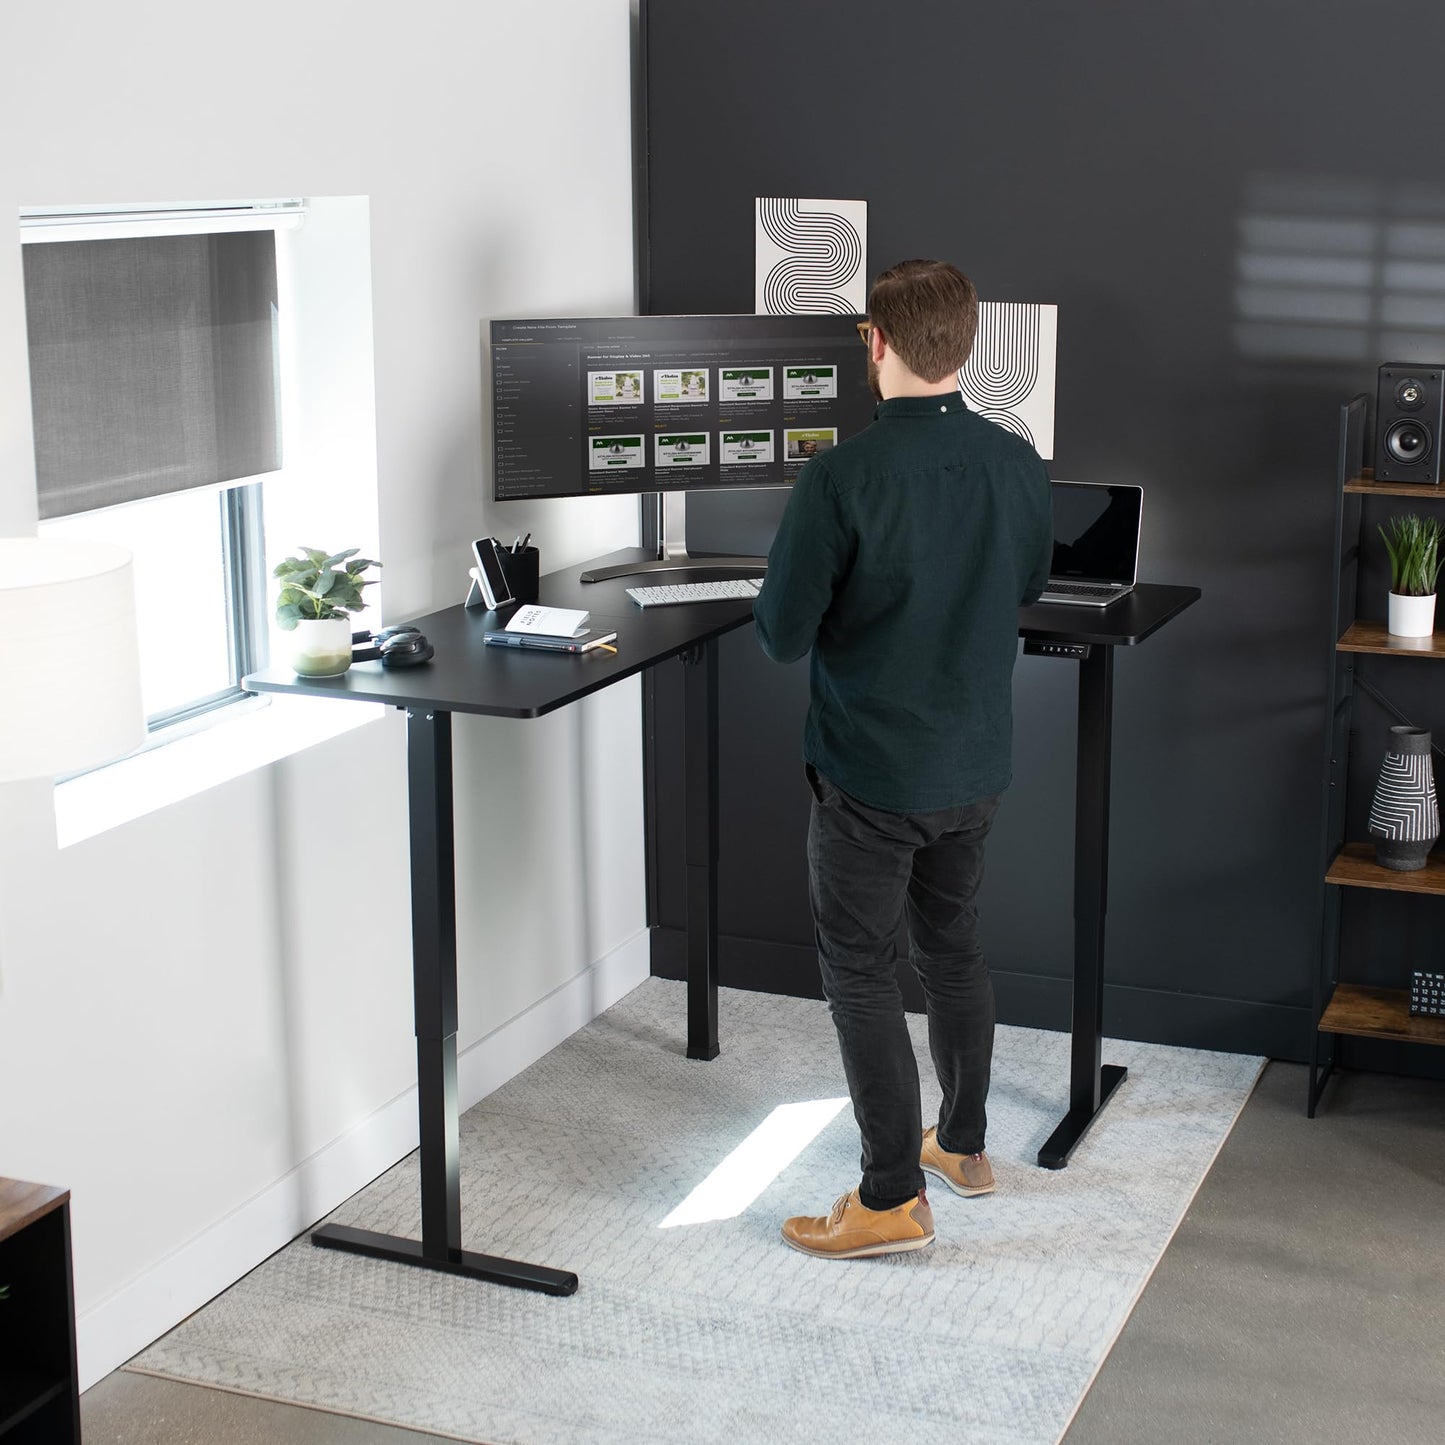 VIVO Electric Height Adjustable 63 x 55 inch Corner Stand Up Desk, Black Table Top, Black Frame, L-Shaped Standing Workstation, 3CT Series,